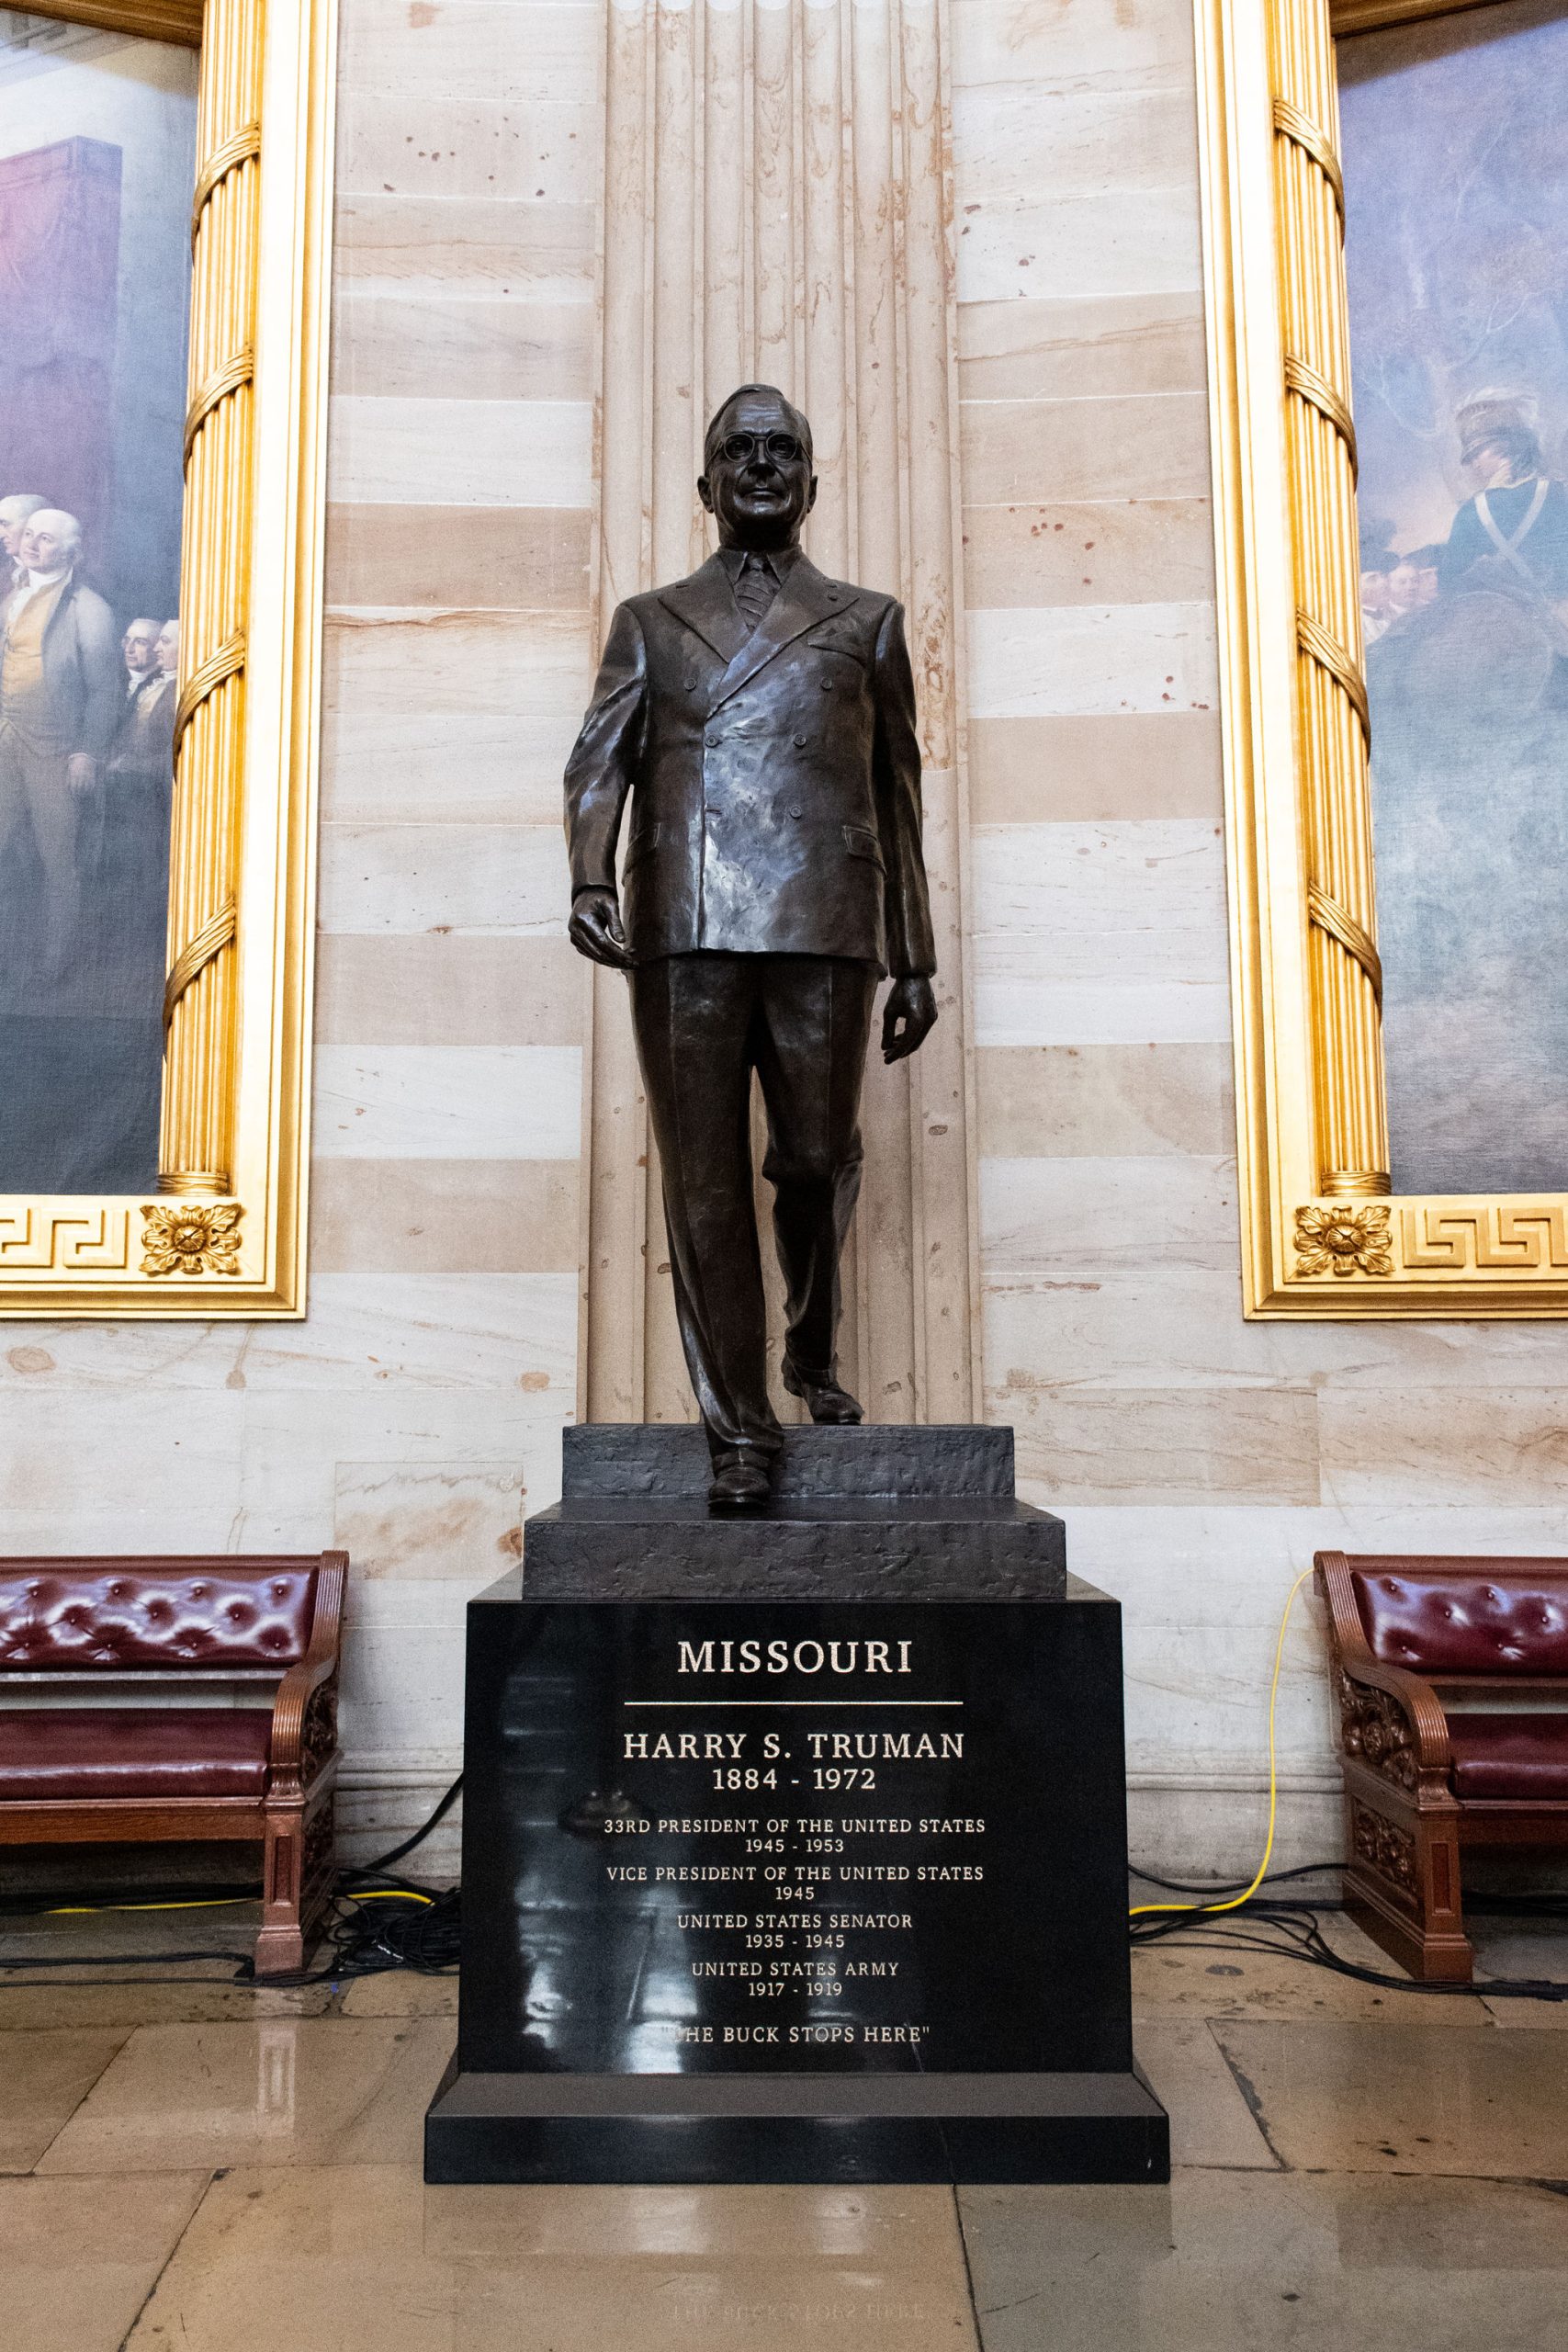 The Harry S. Truman Statue in the U.S. Capitol Rotunda